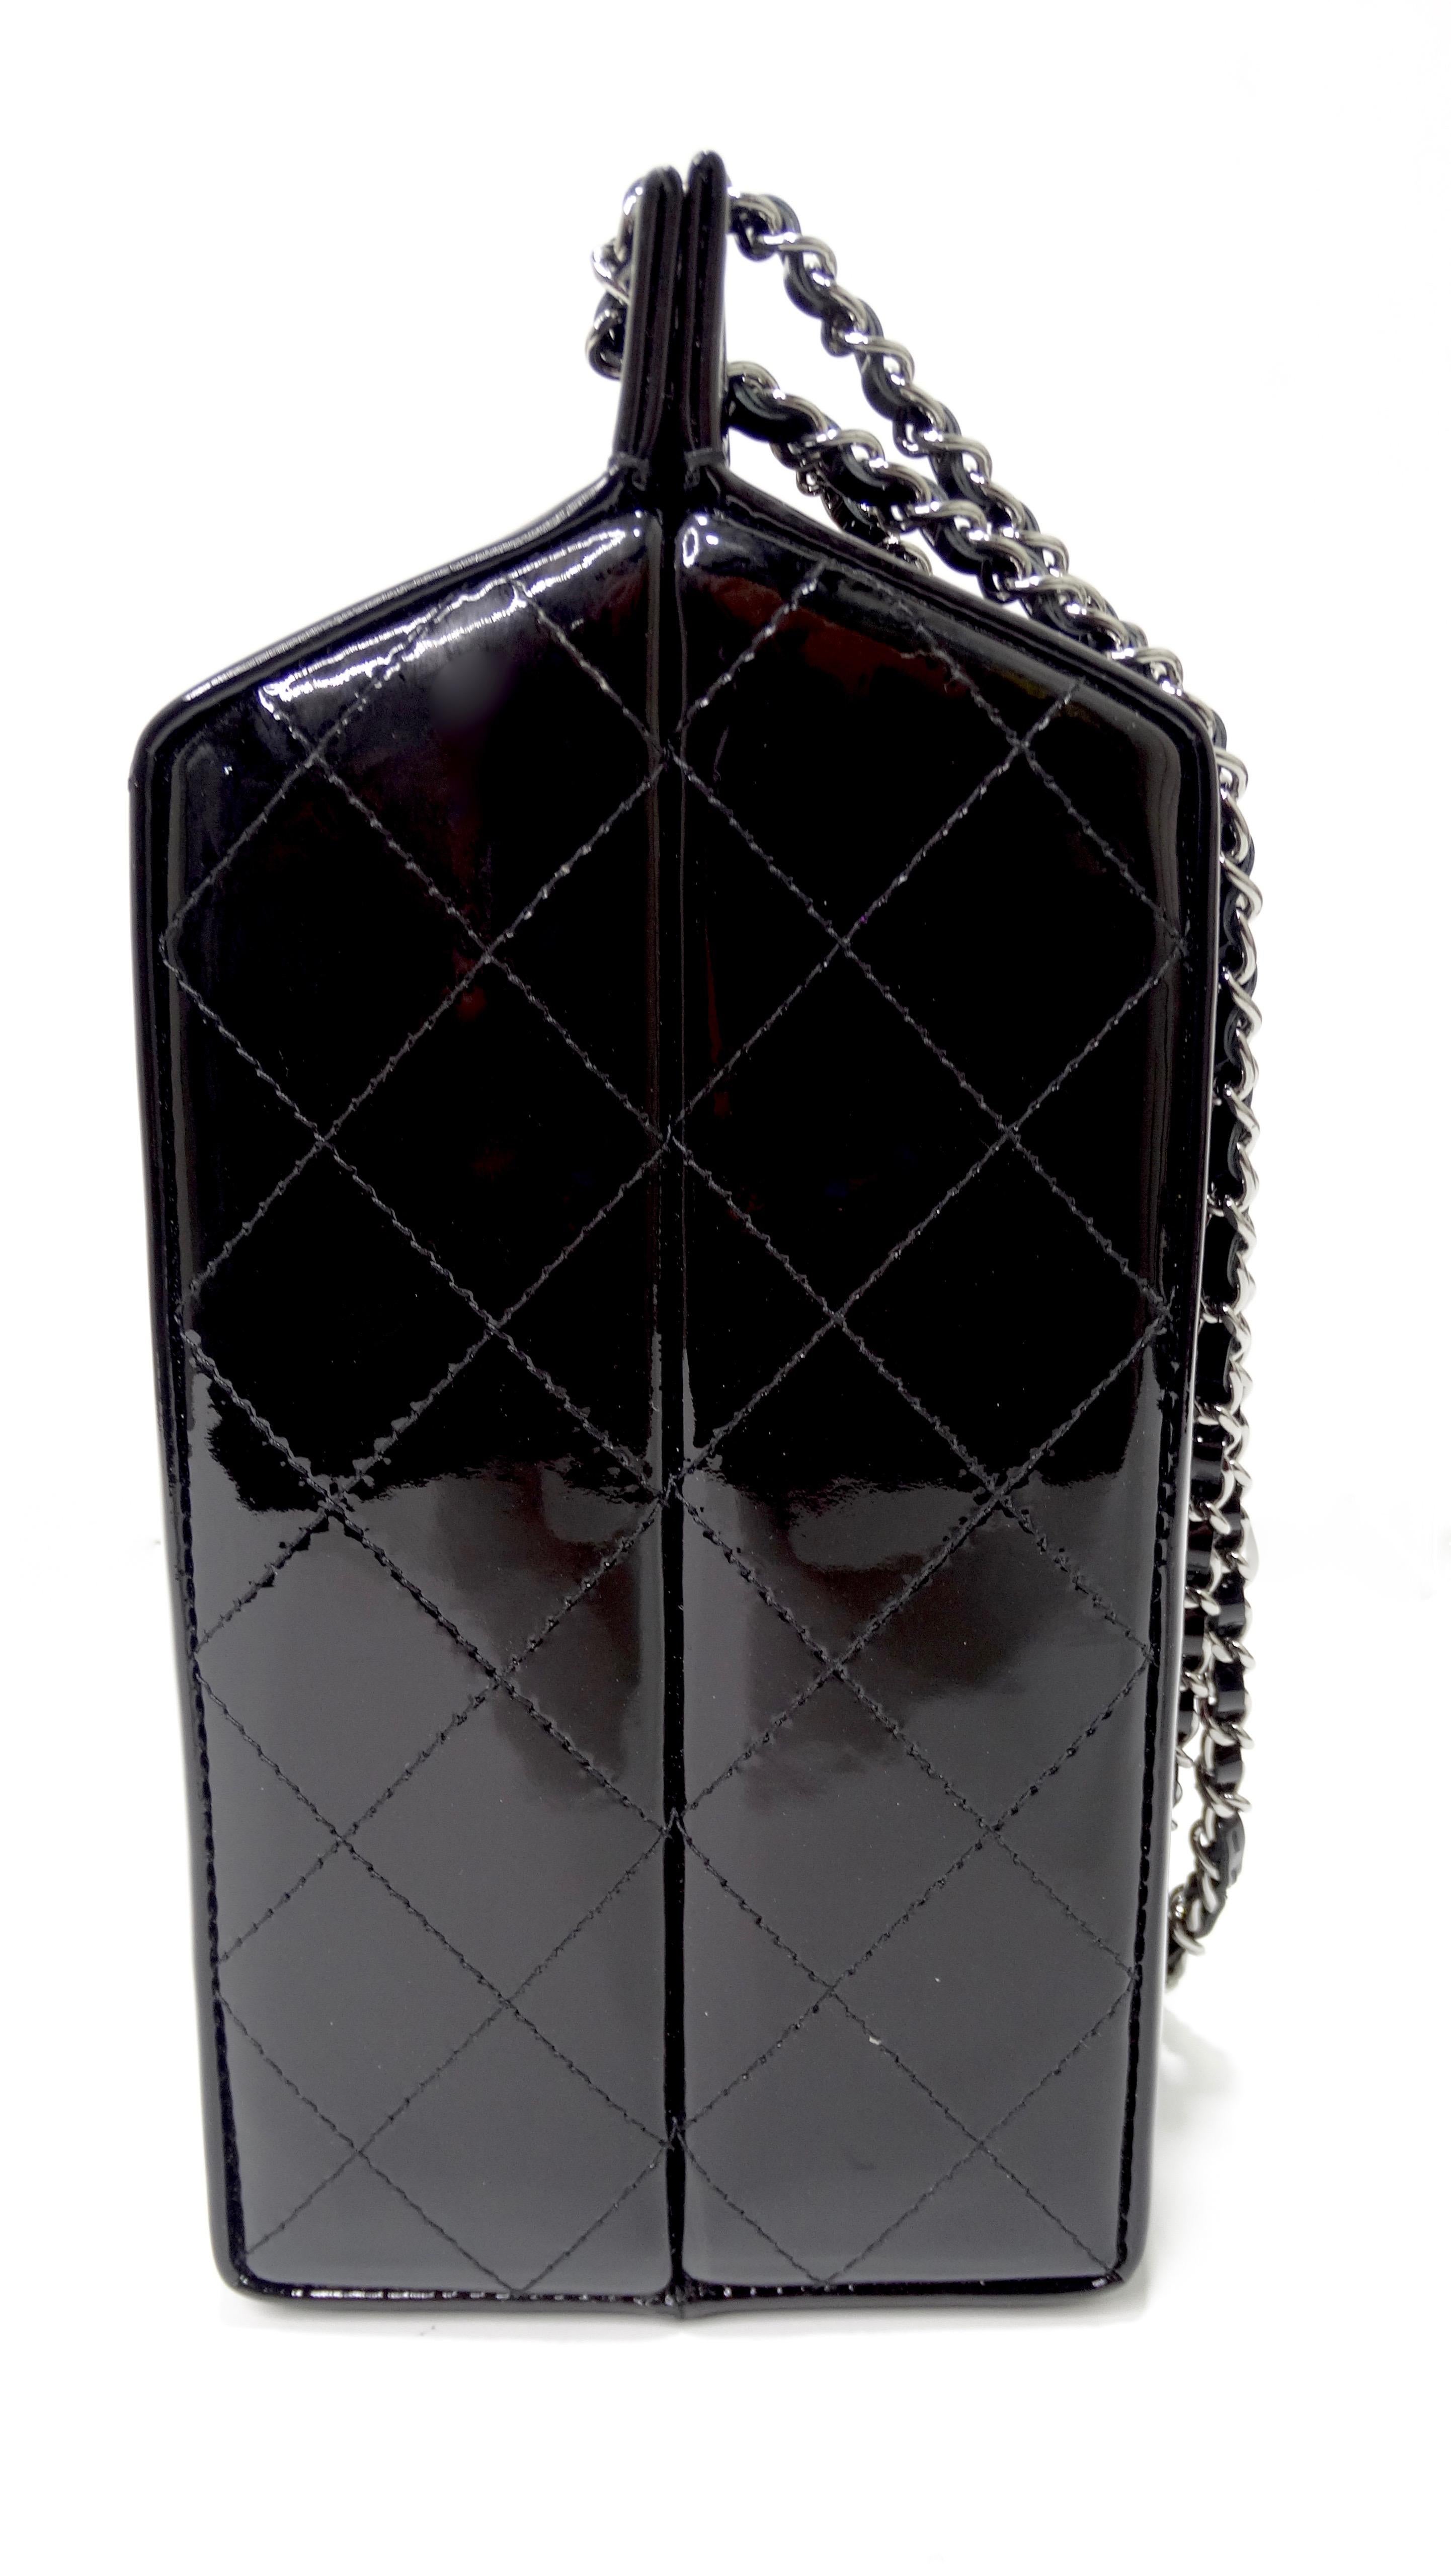 Chanel 2015 Black Patent Leather Milk Carton Bag 2